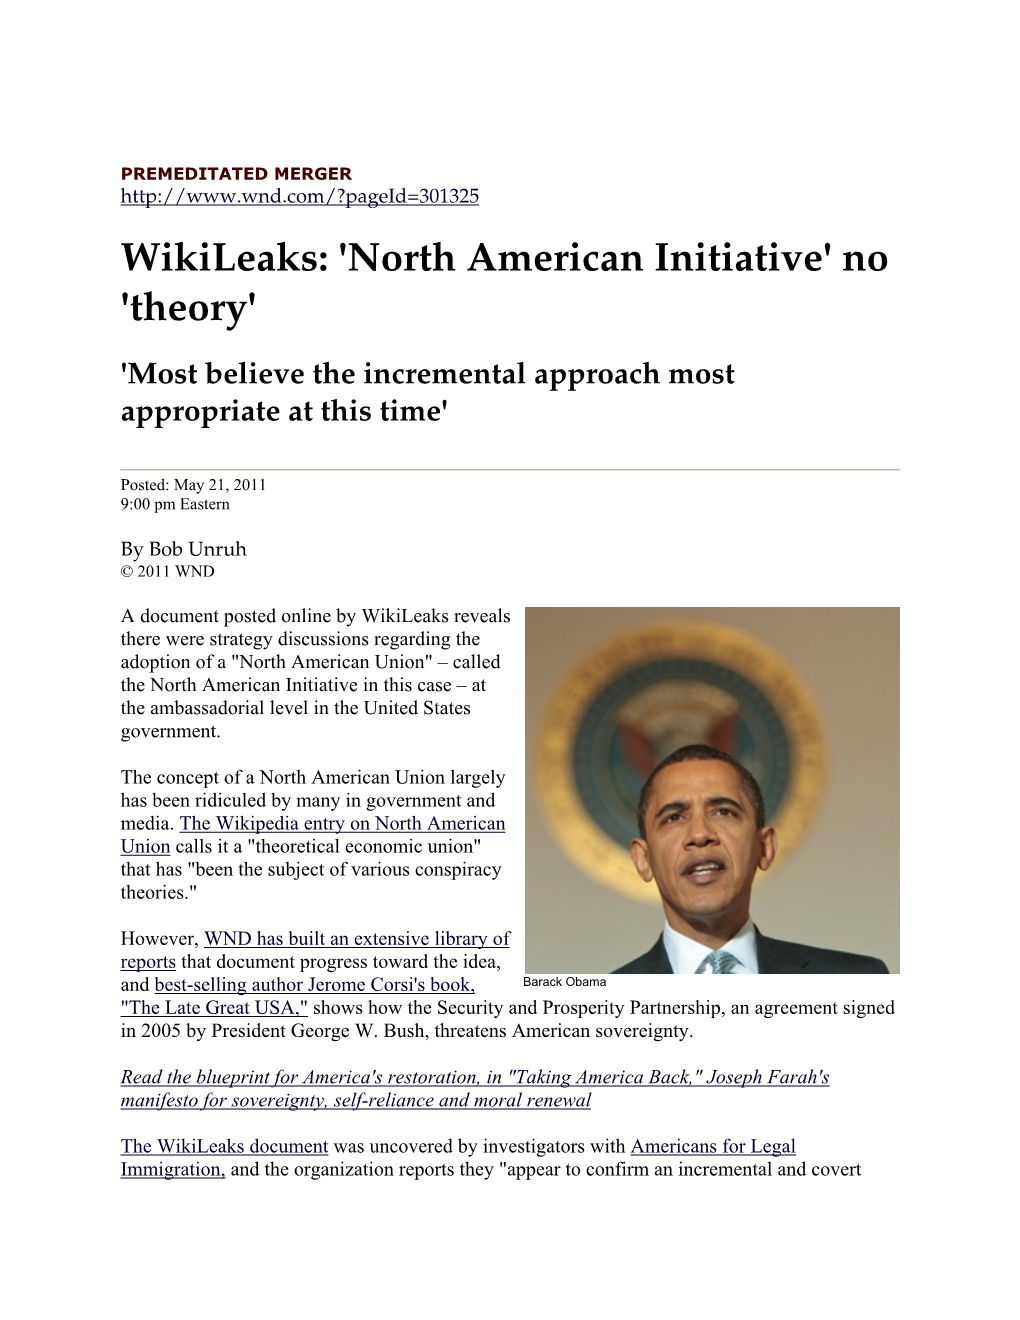 Wikileaks: 'North American Initiative' No 'Theory'